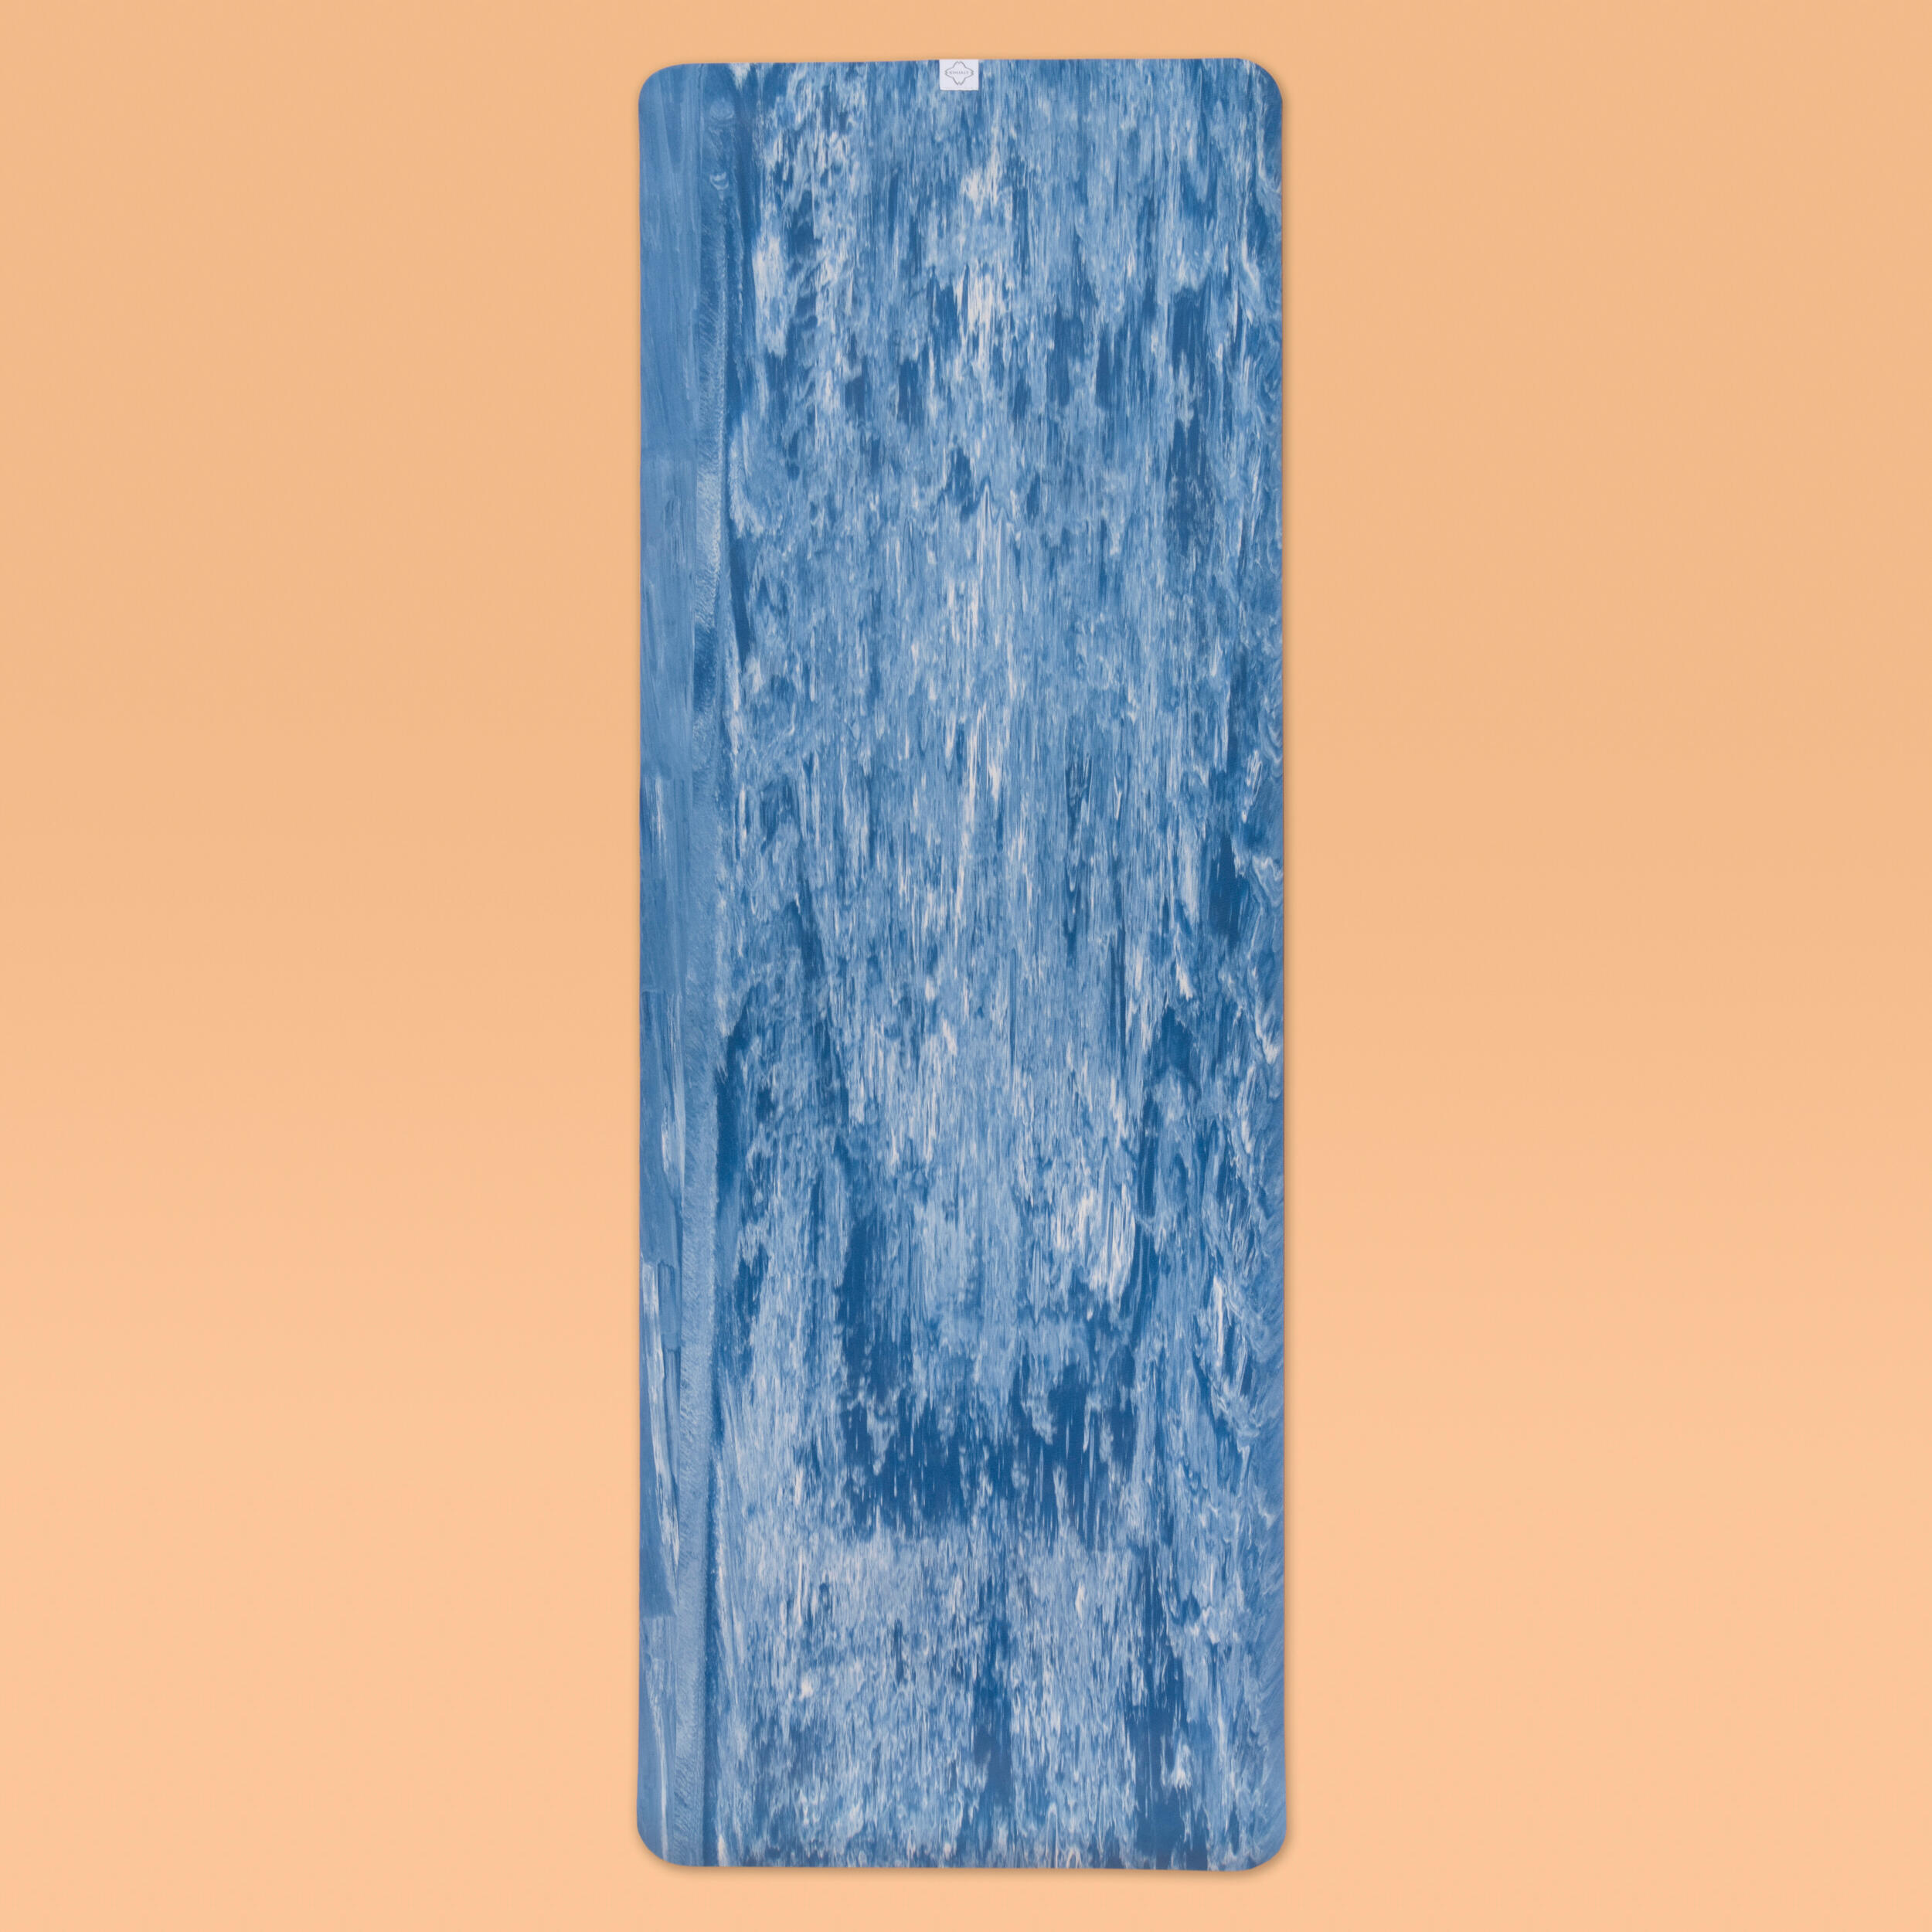 Customer Reviews: 185 cm x 65 cm x 5 mm Yoga Mat Grip - Blue Decathlon